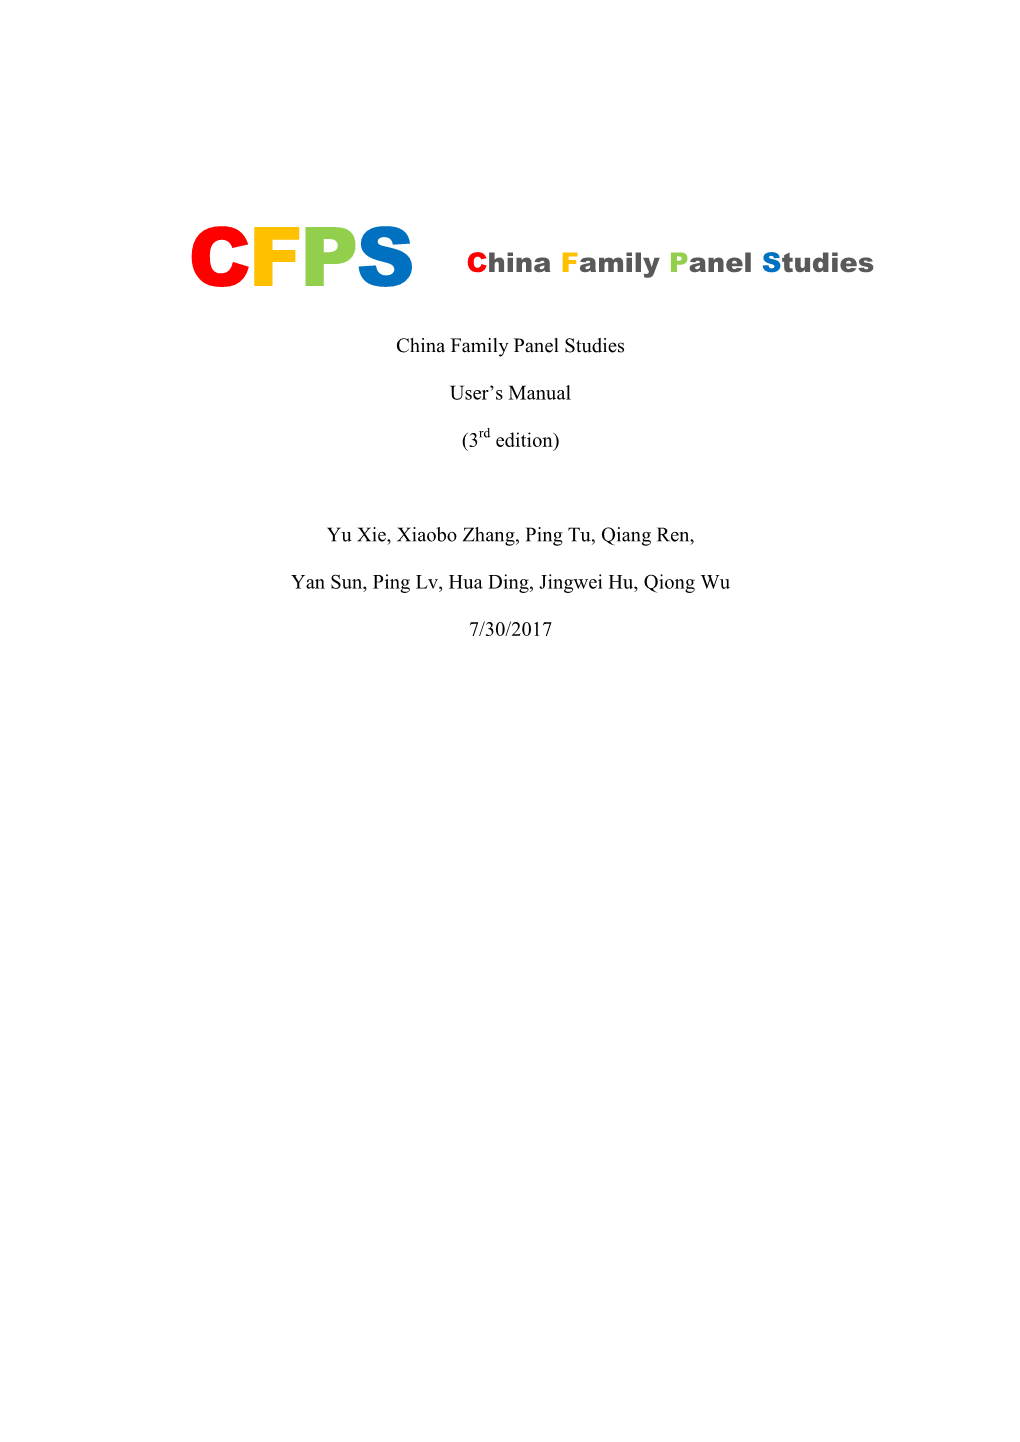 CFPS China Family Panel Studies